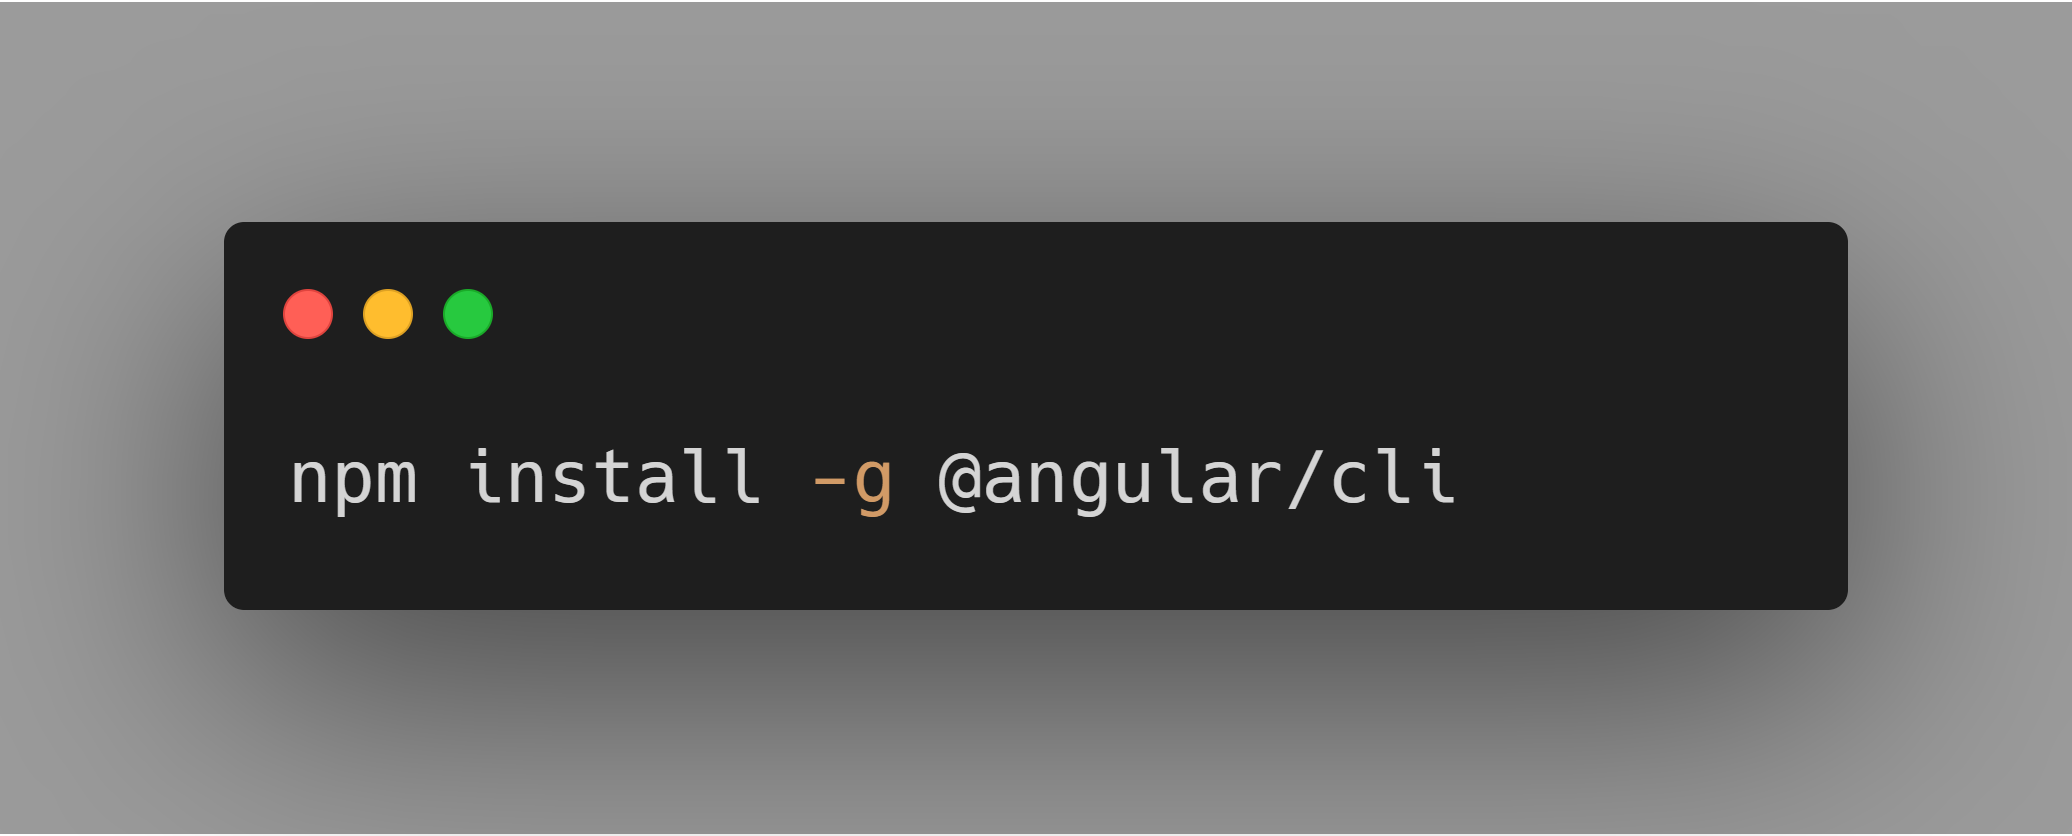 angular-cli-install.png